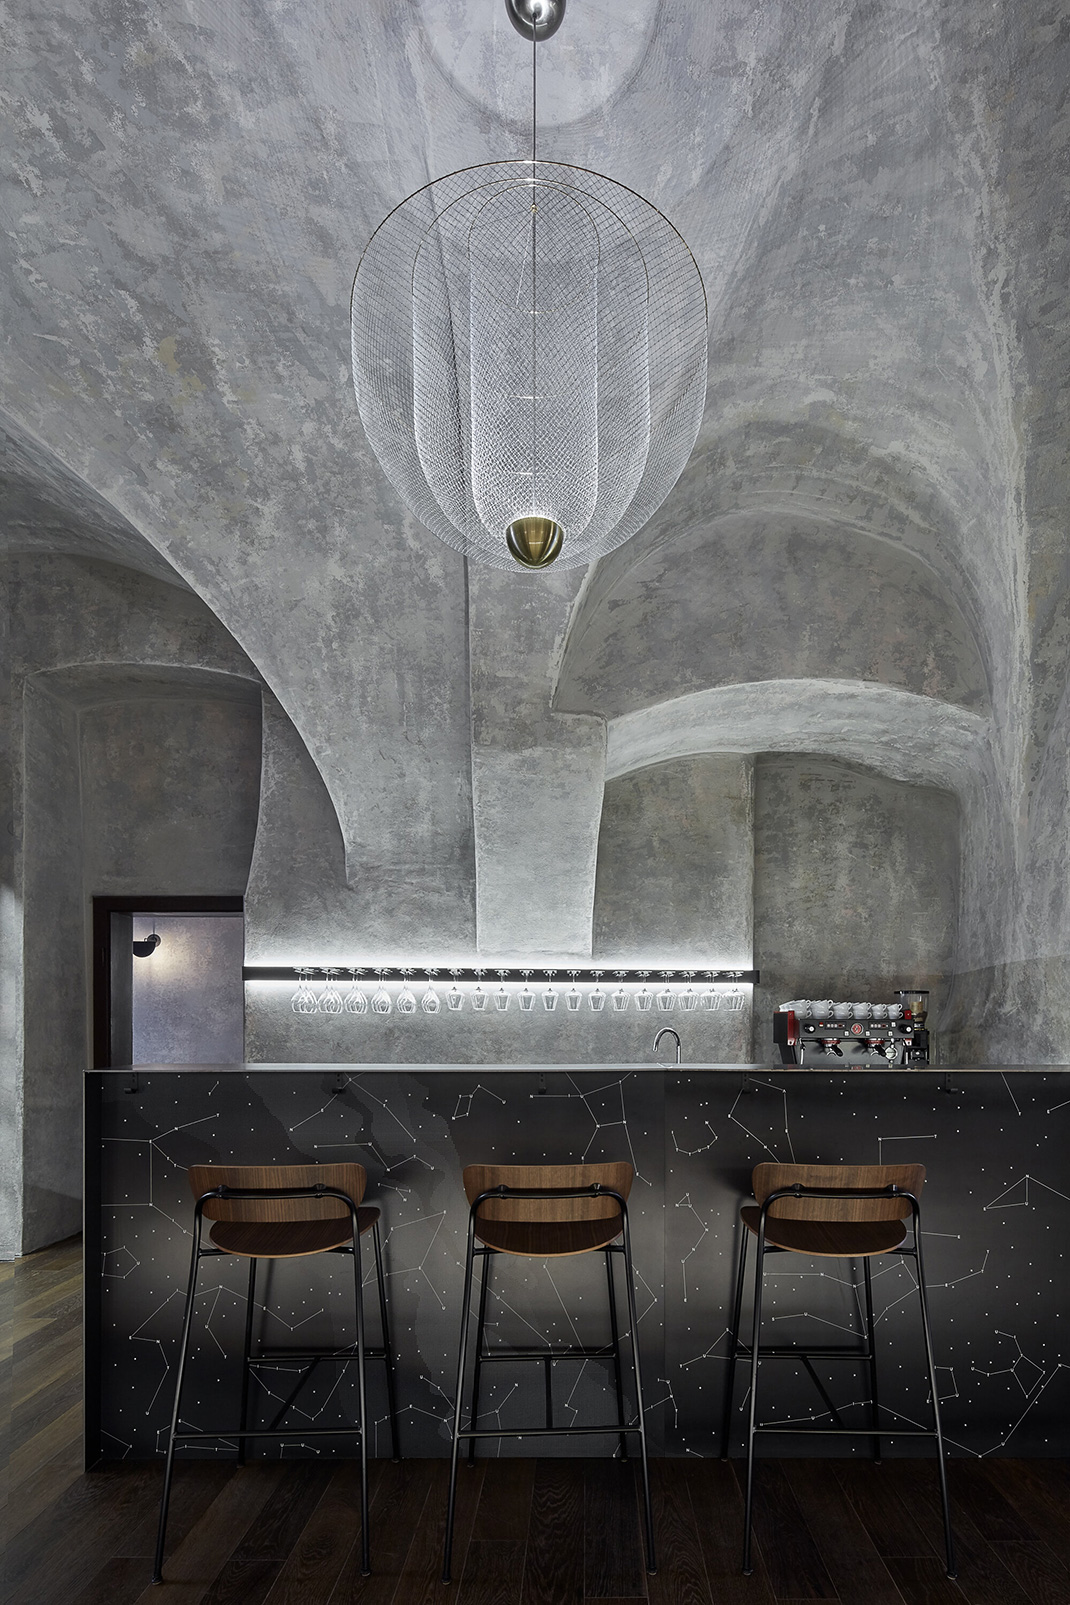 UT酒吧空间设计 捷克 布拉格广场 酒吧 LOFT 工业风  餐厅LOGO VI设计 空间设计 视觉餐饮